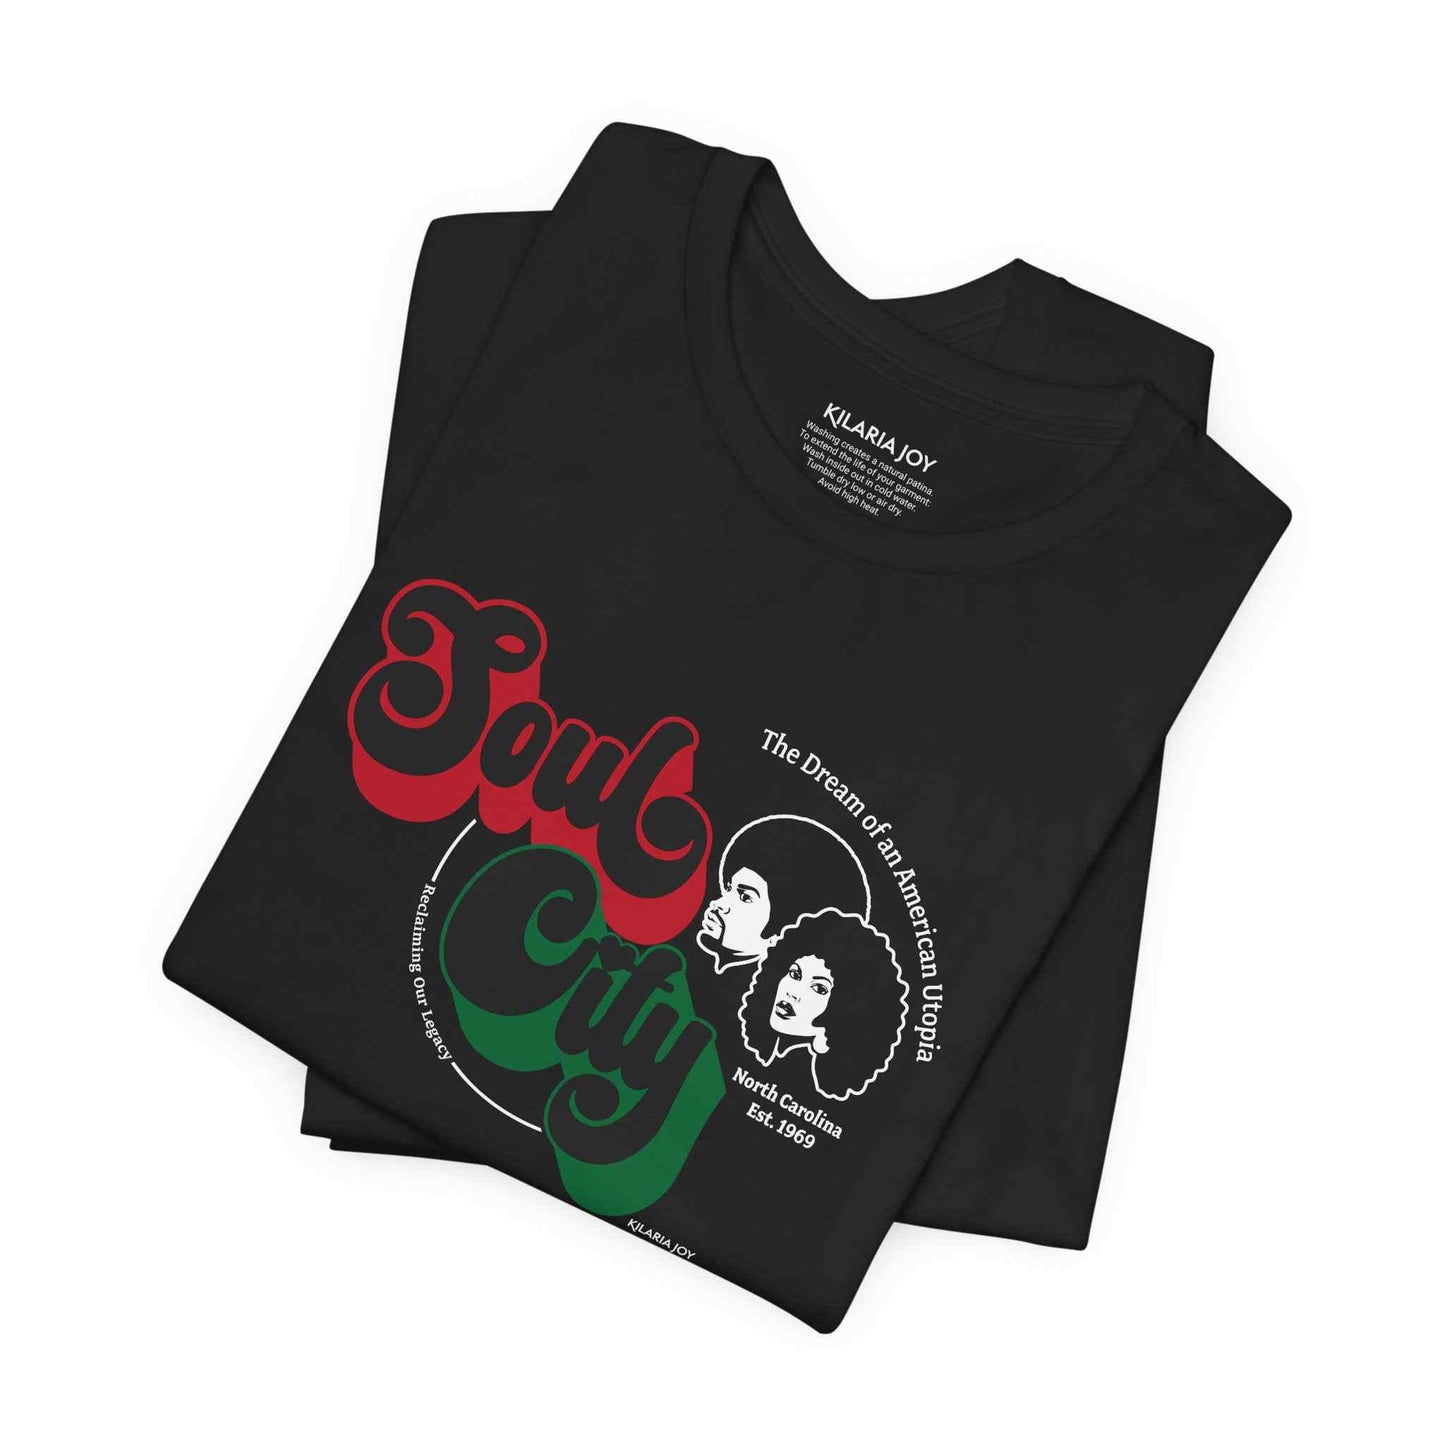 Soul City Women's Classic Modern Fit T-Shirt